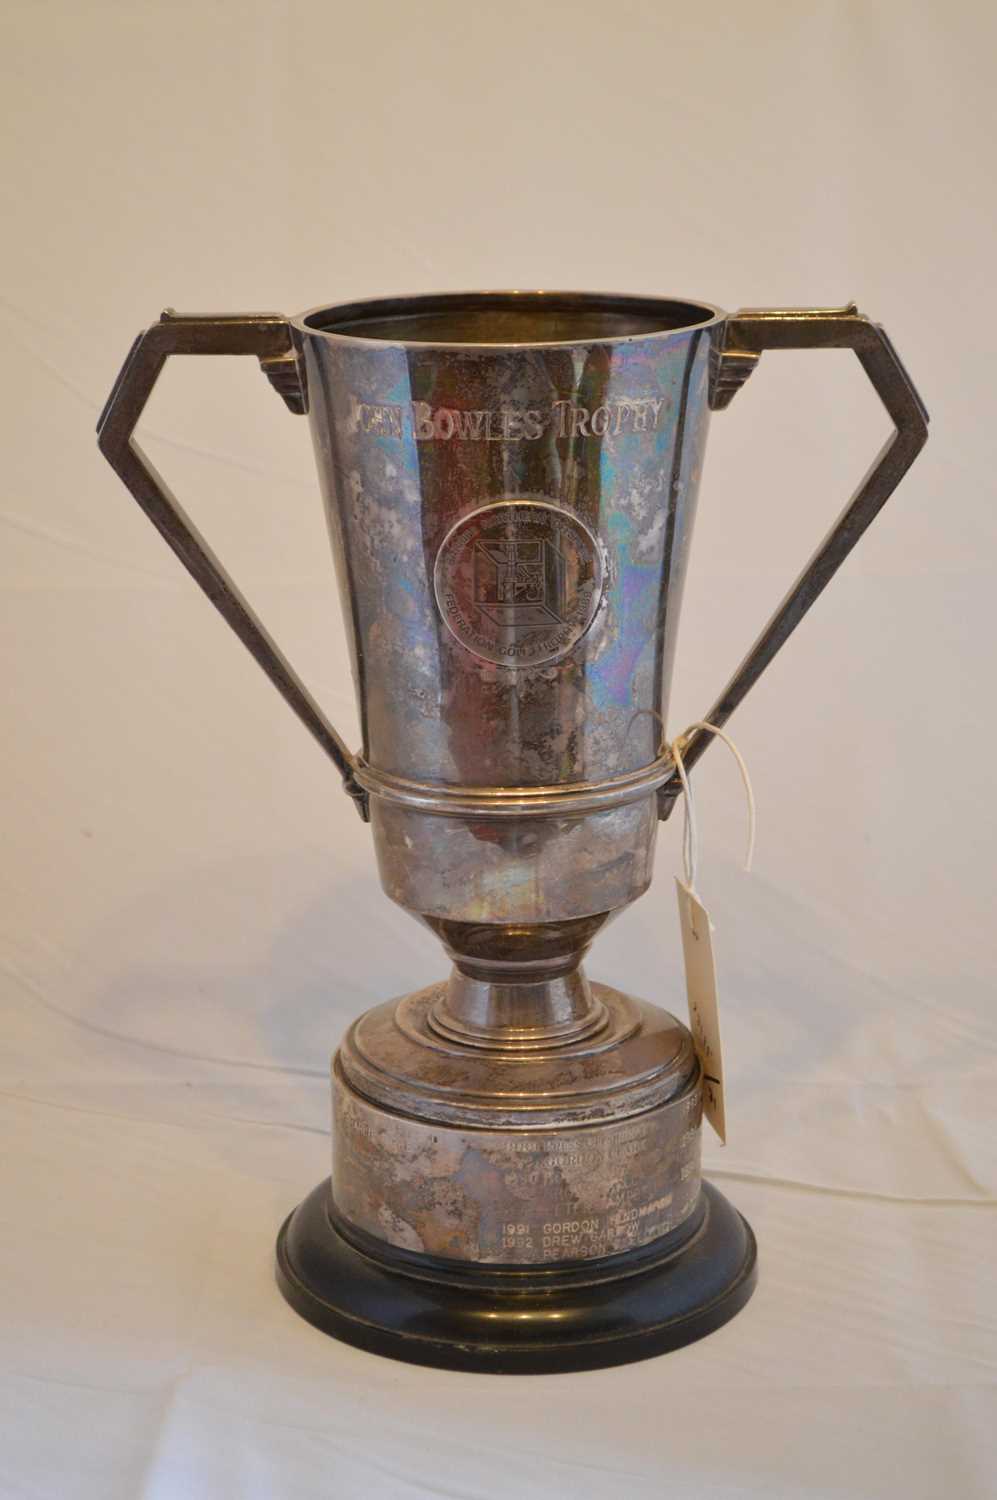 Lot 161 - An Art Deco silver trophy cup